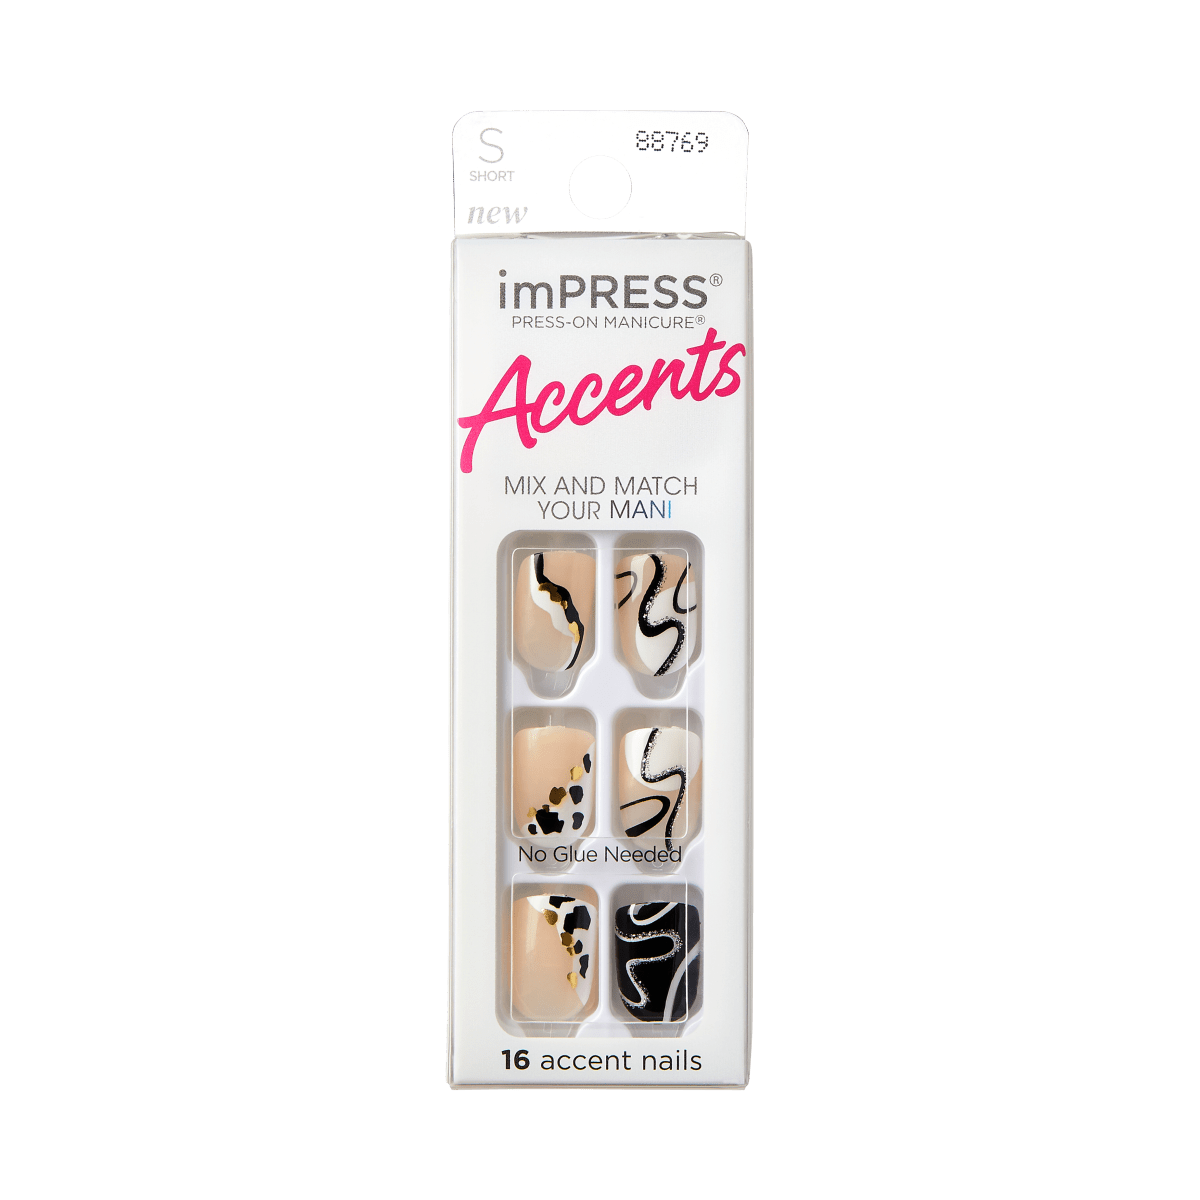 imPRESS Press-On Manicure Accents - Top Notch